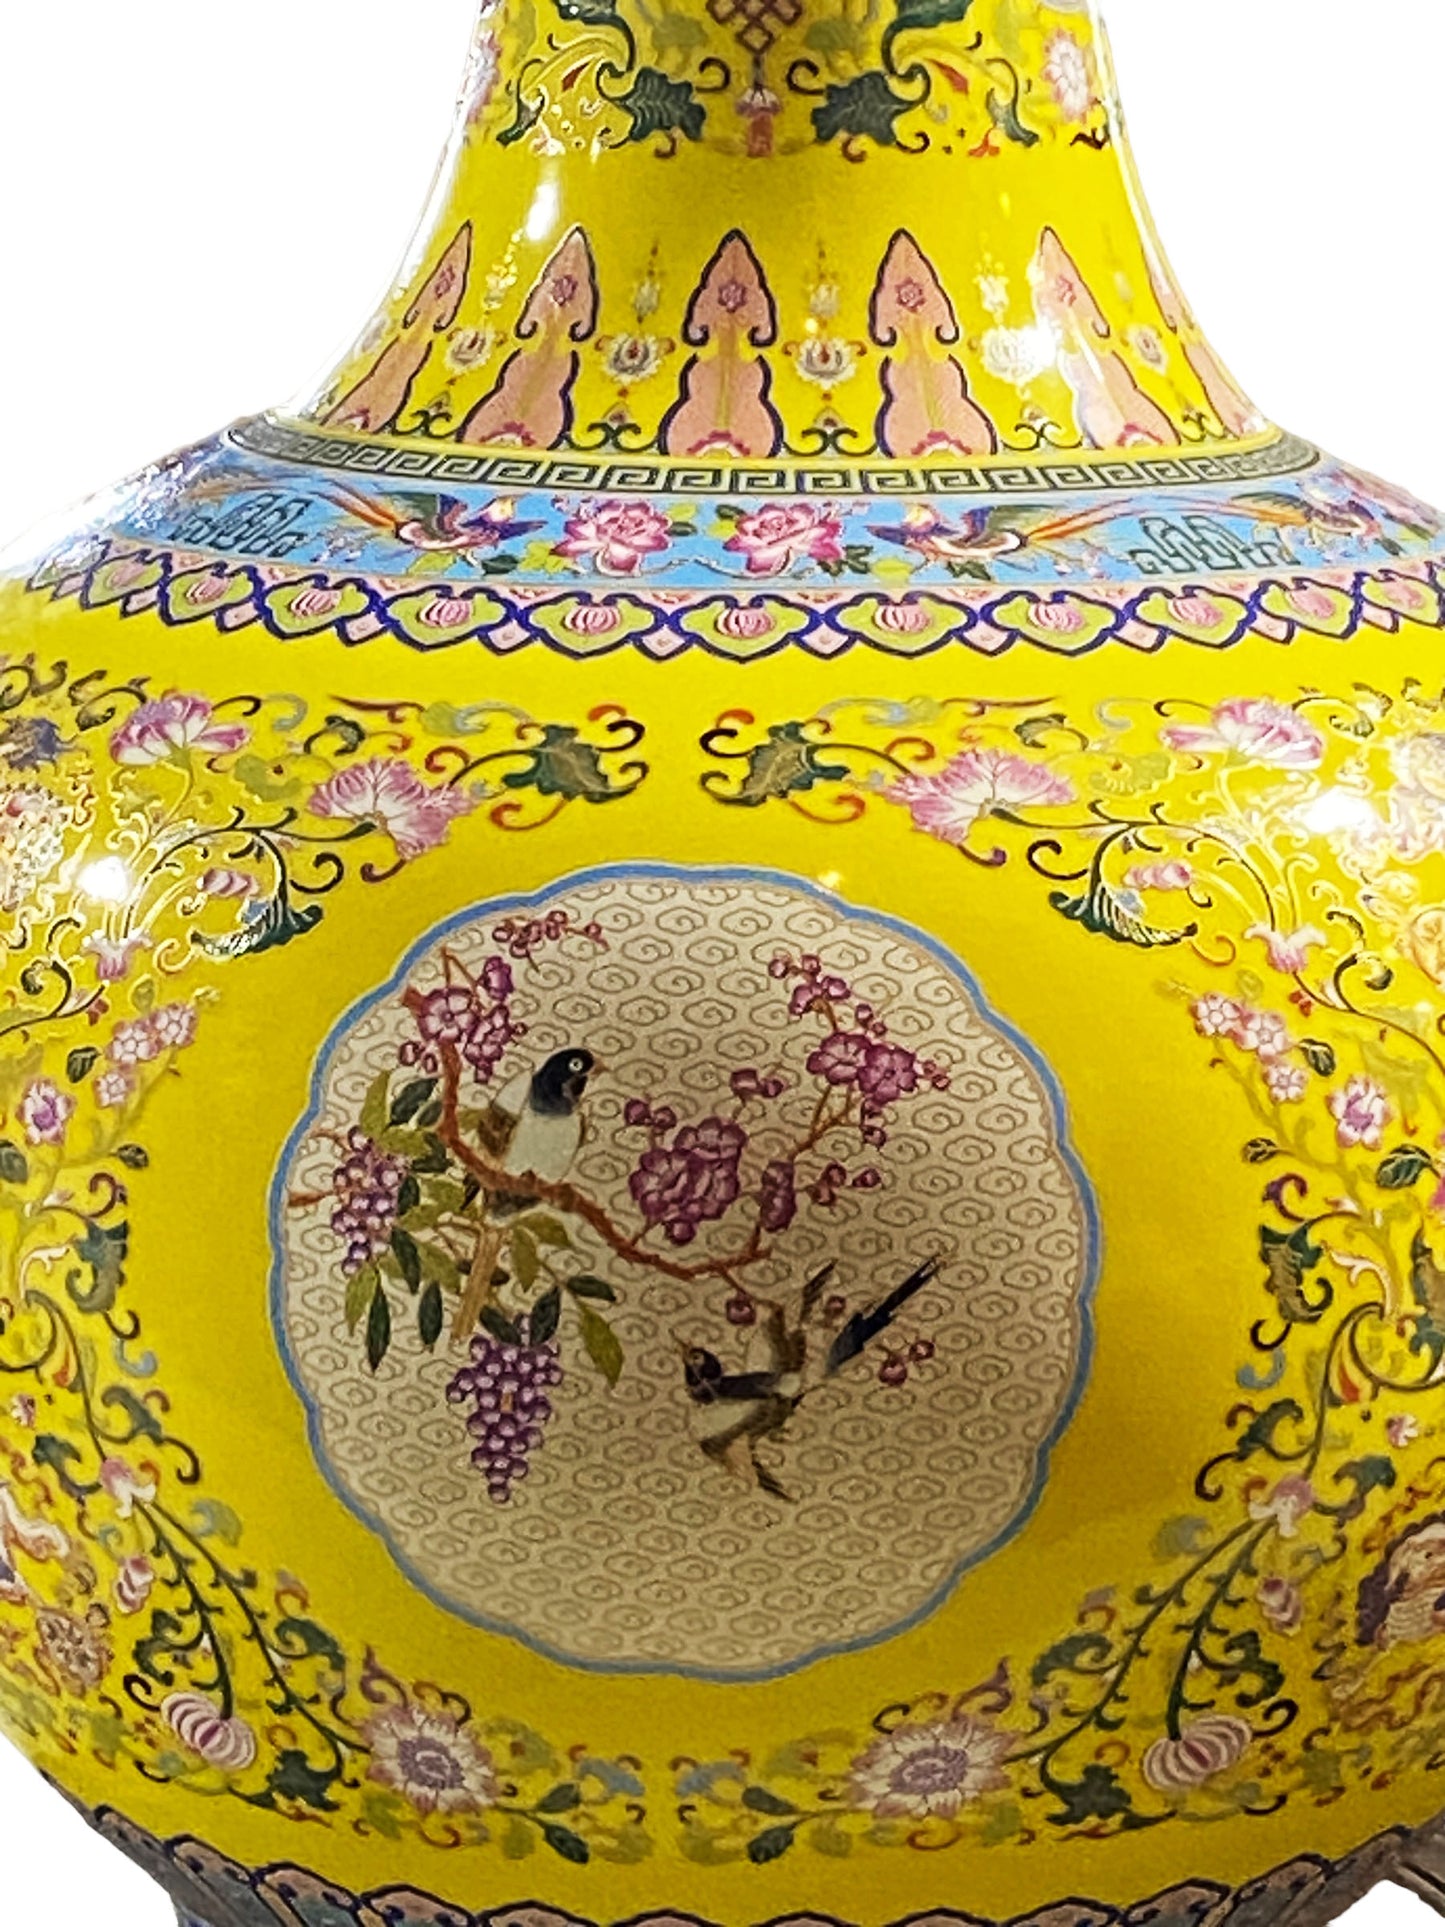 #5646 Imperial Yellow Famille Jaune Large Onion Shape Vase 22" H